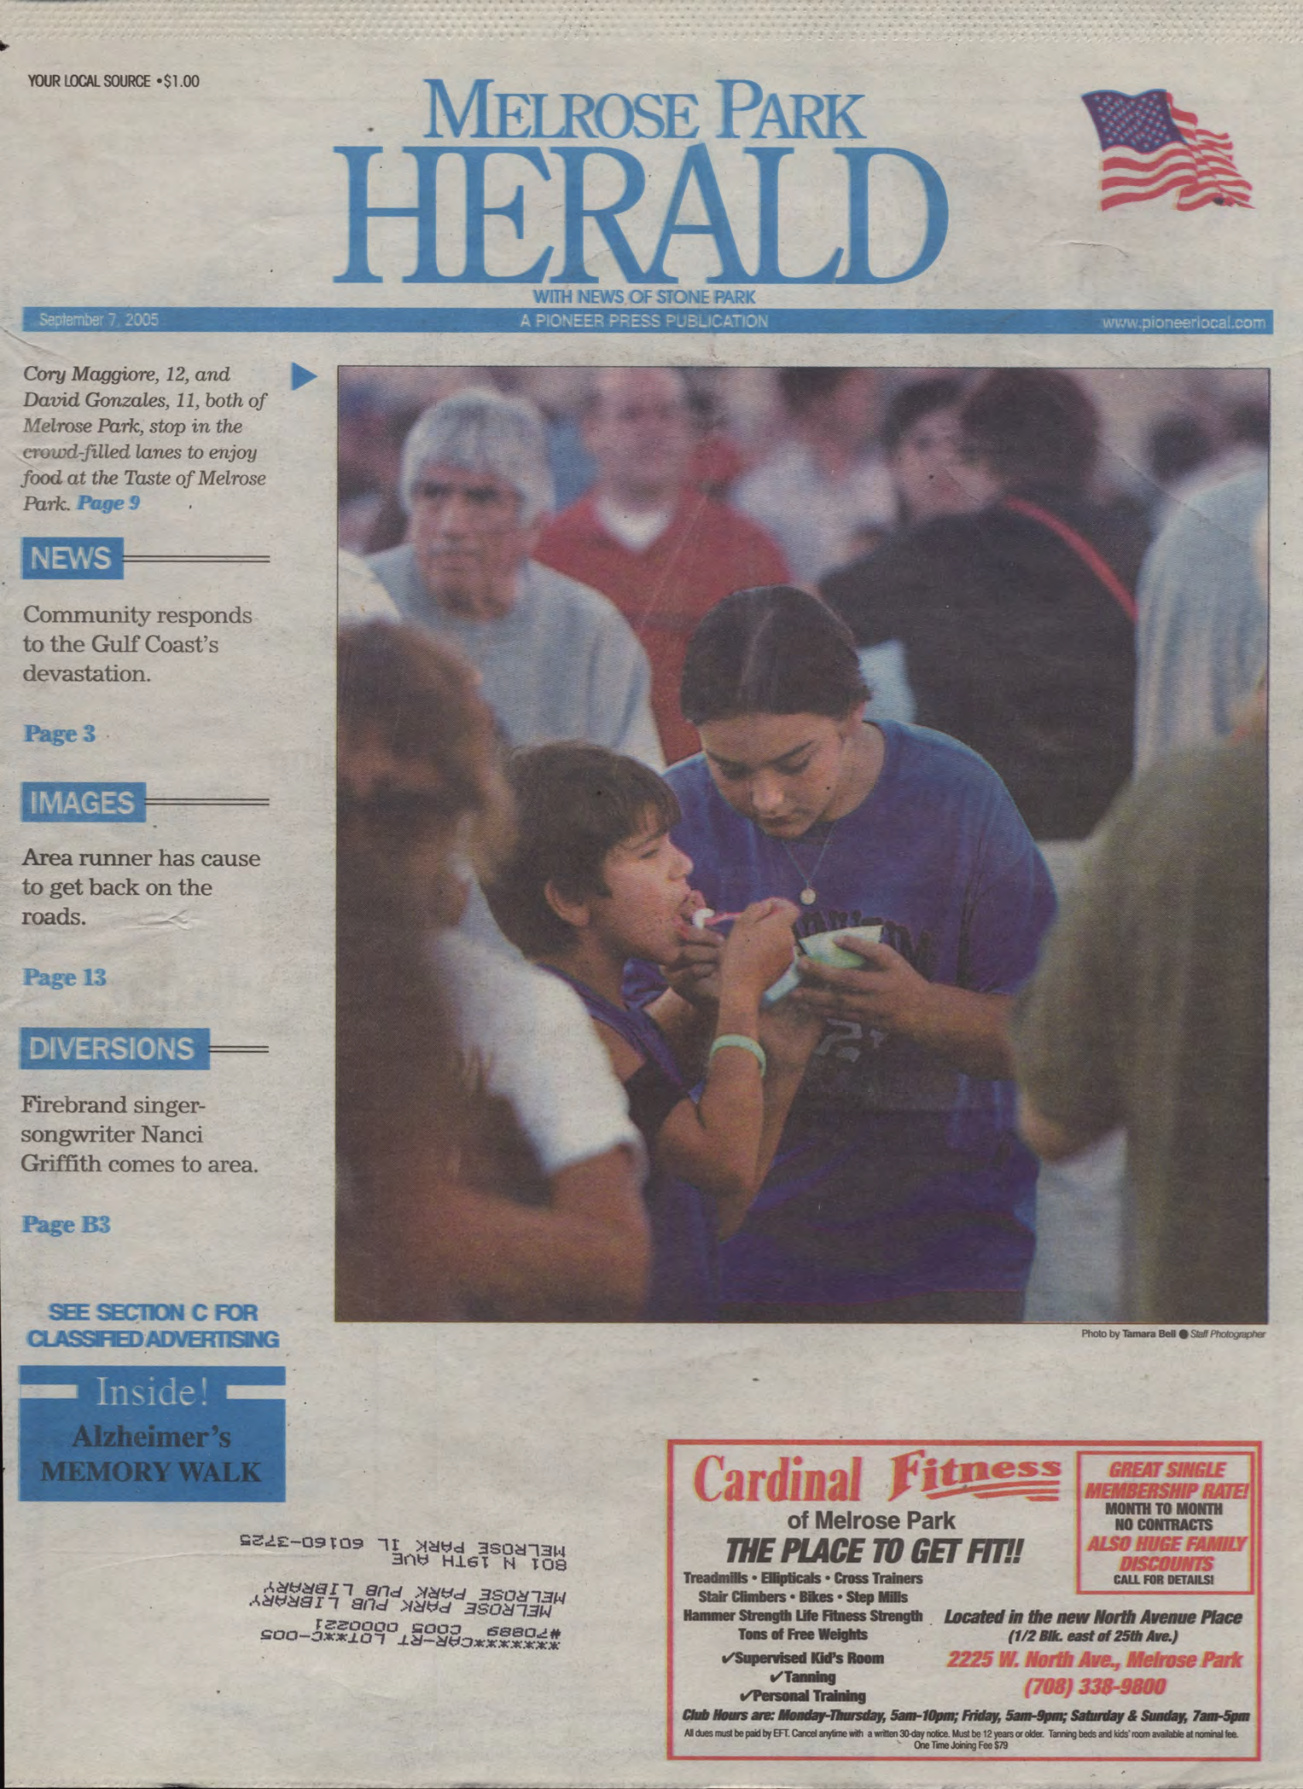 The Herald – 20050907